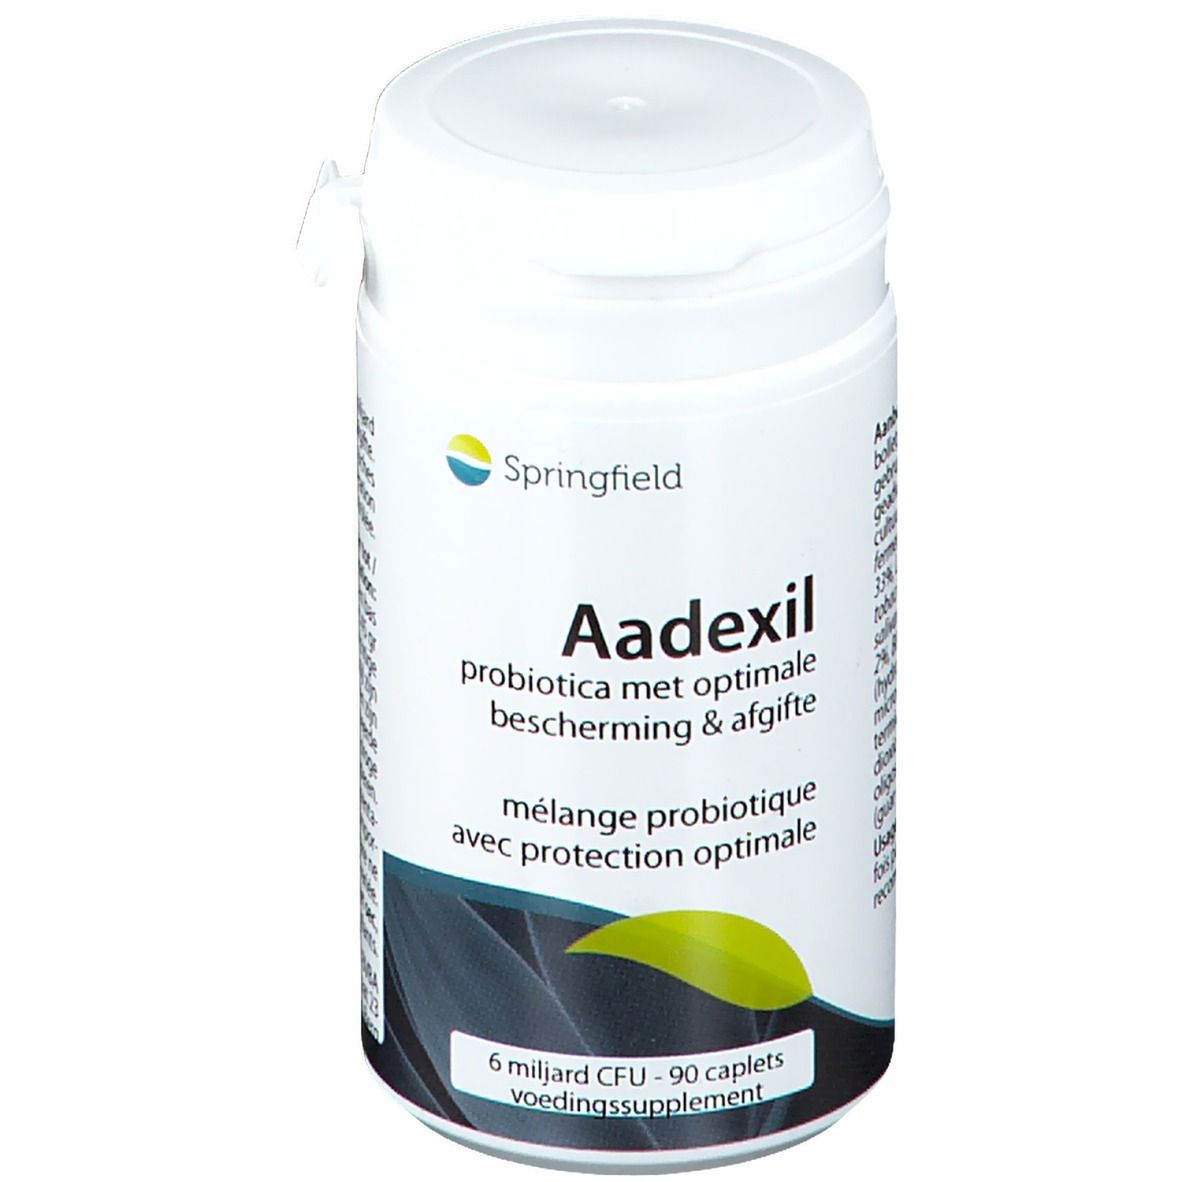 Sprinfield Aadexil